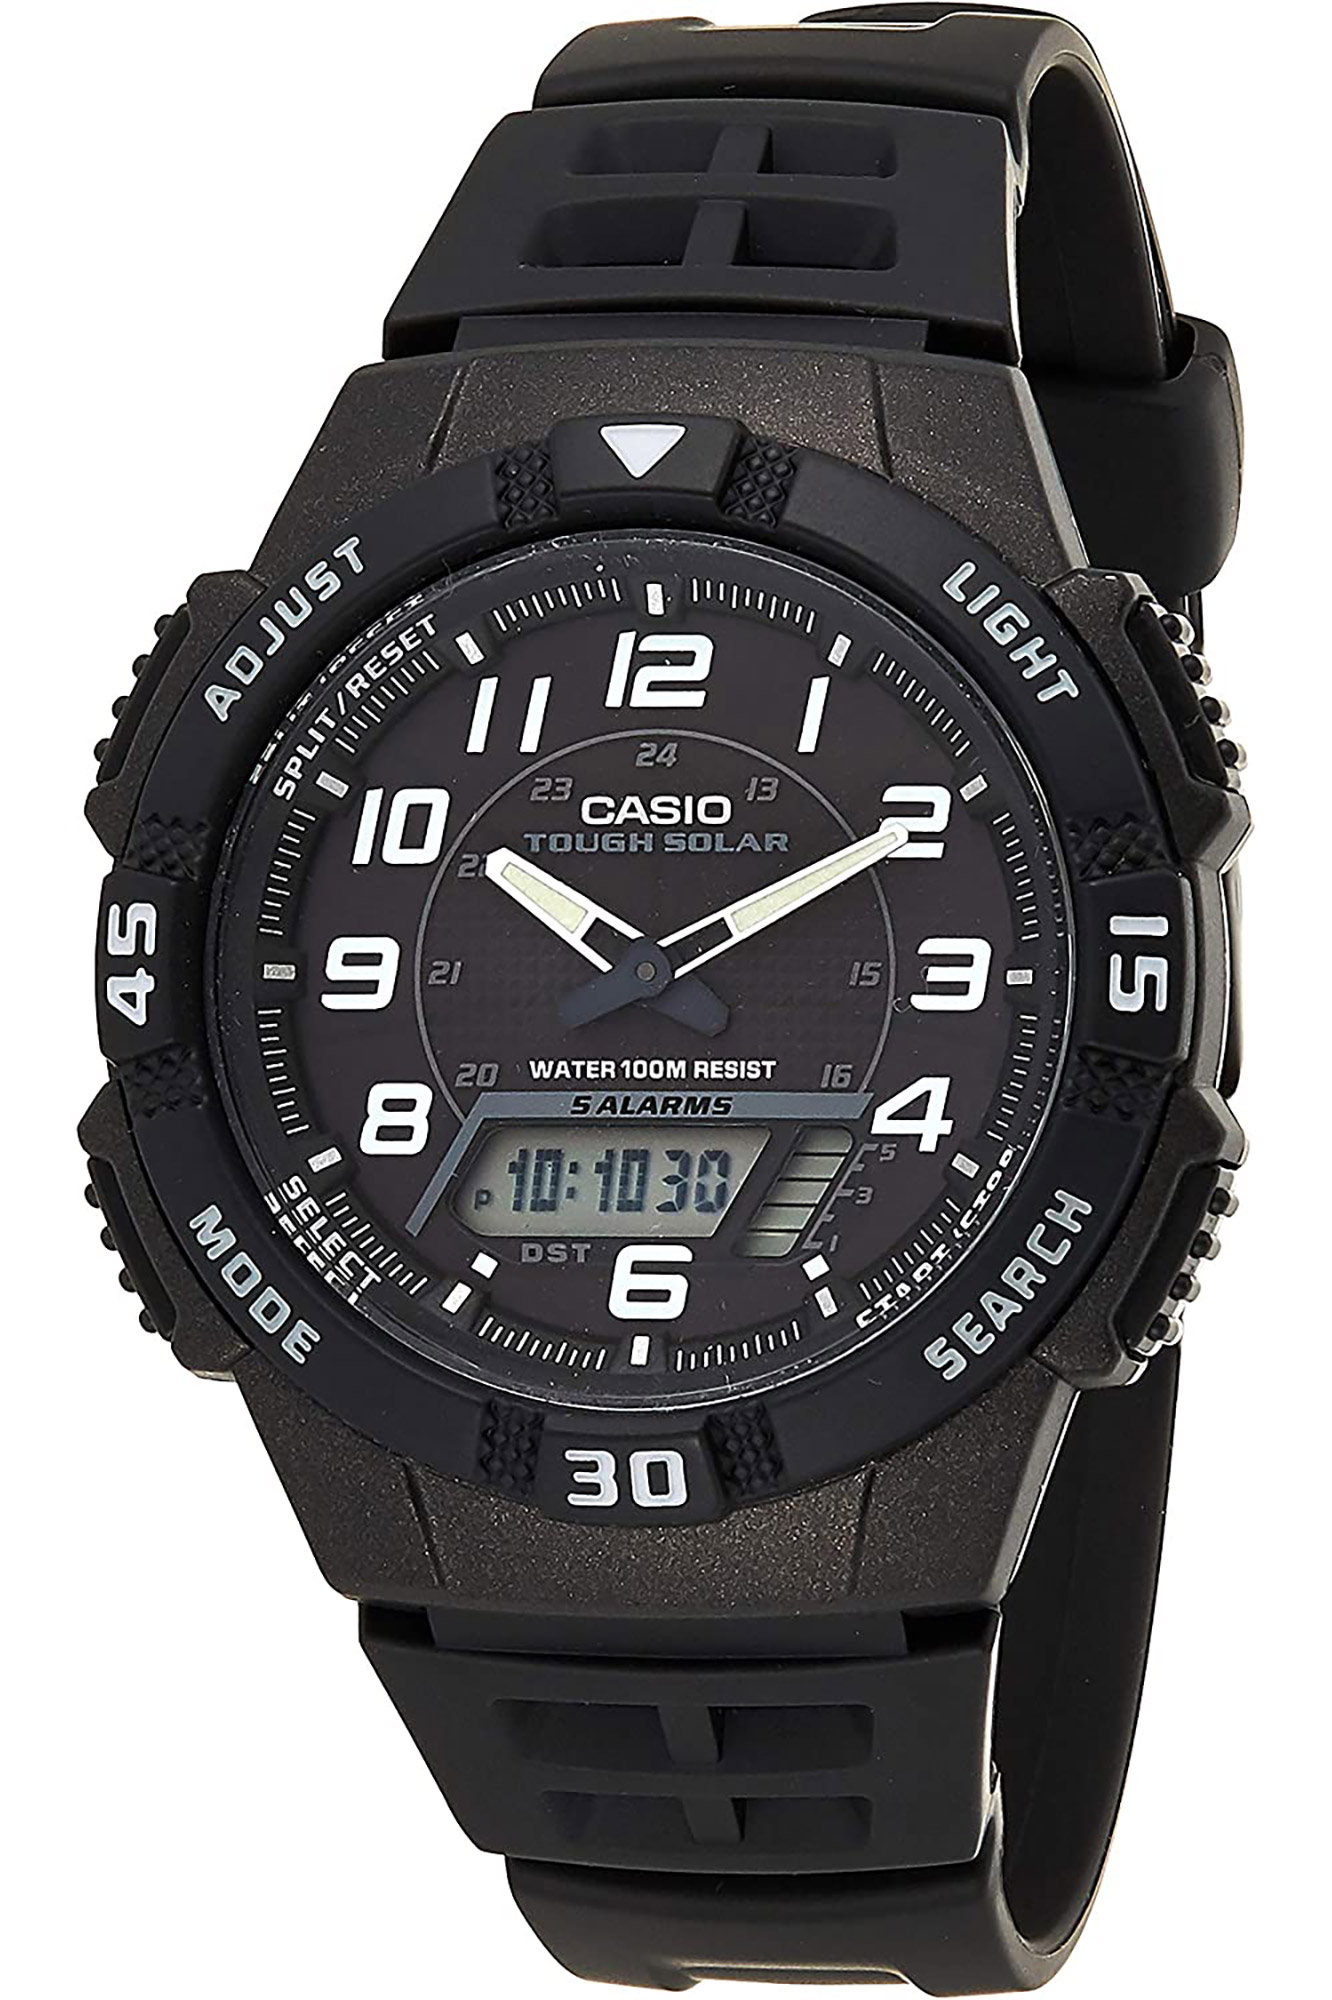 Reloj CASIO Collection aq-s800w-1bvef